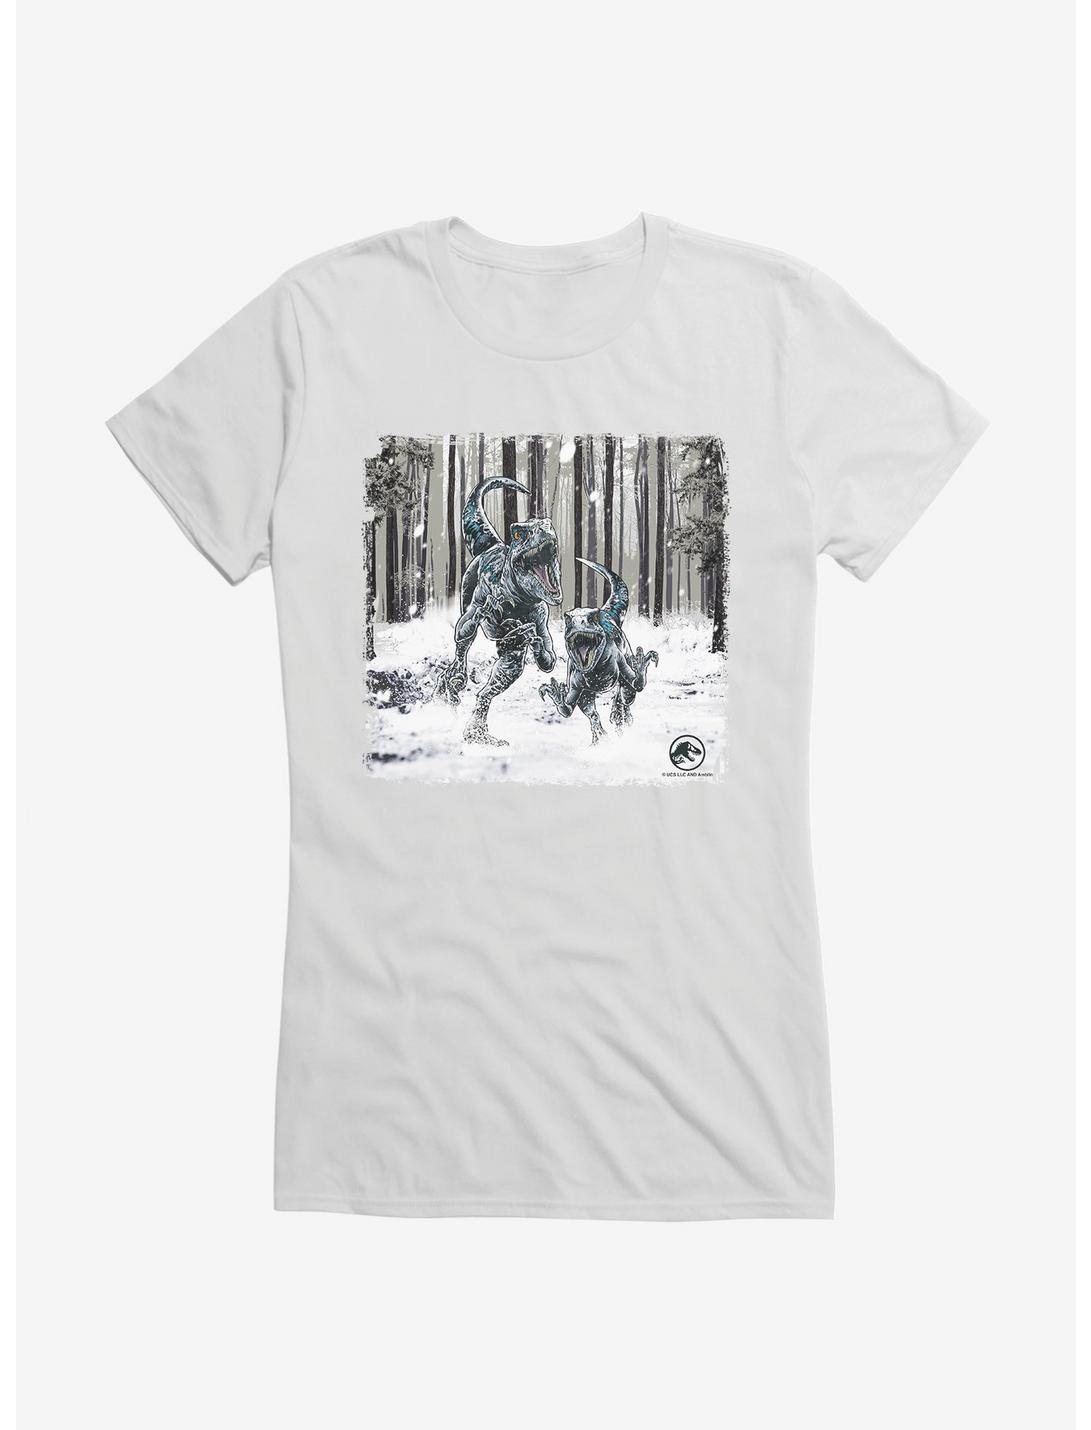 Jurassic World Dominion Forest Hunt Girls T-Shirt, , hi-res